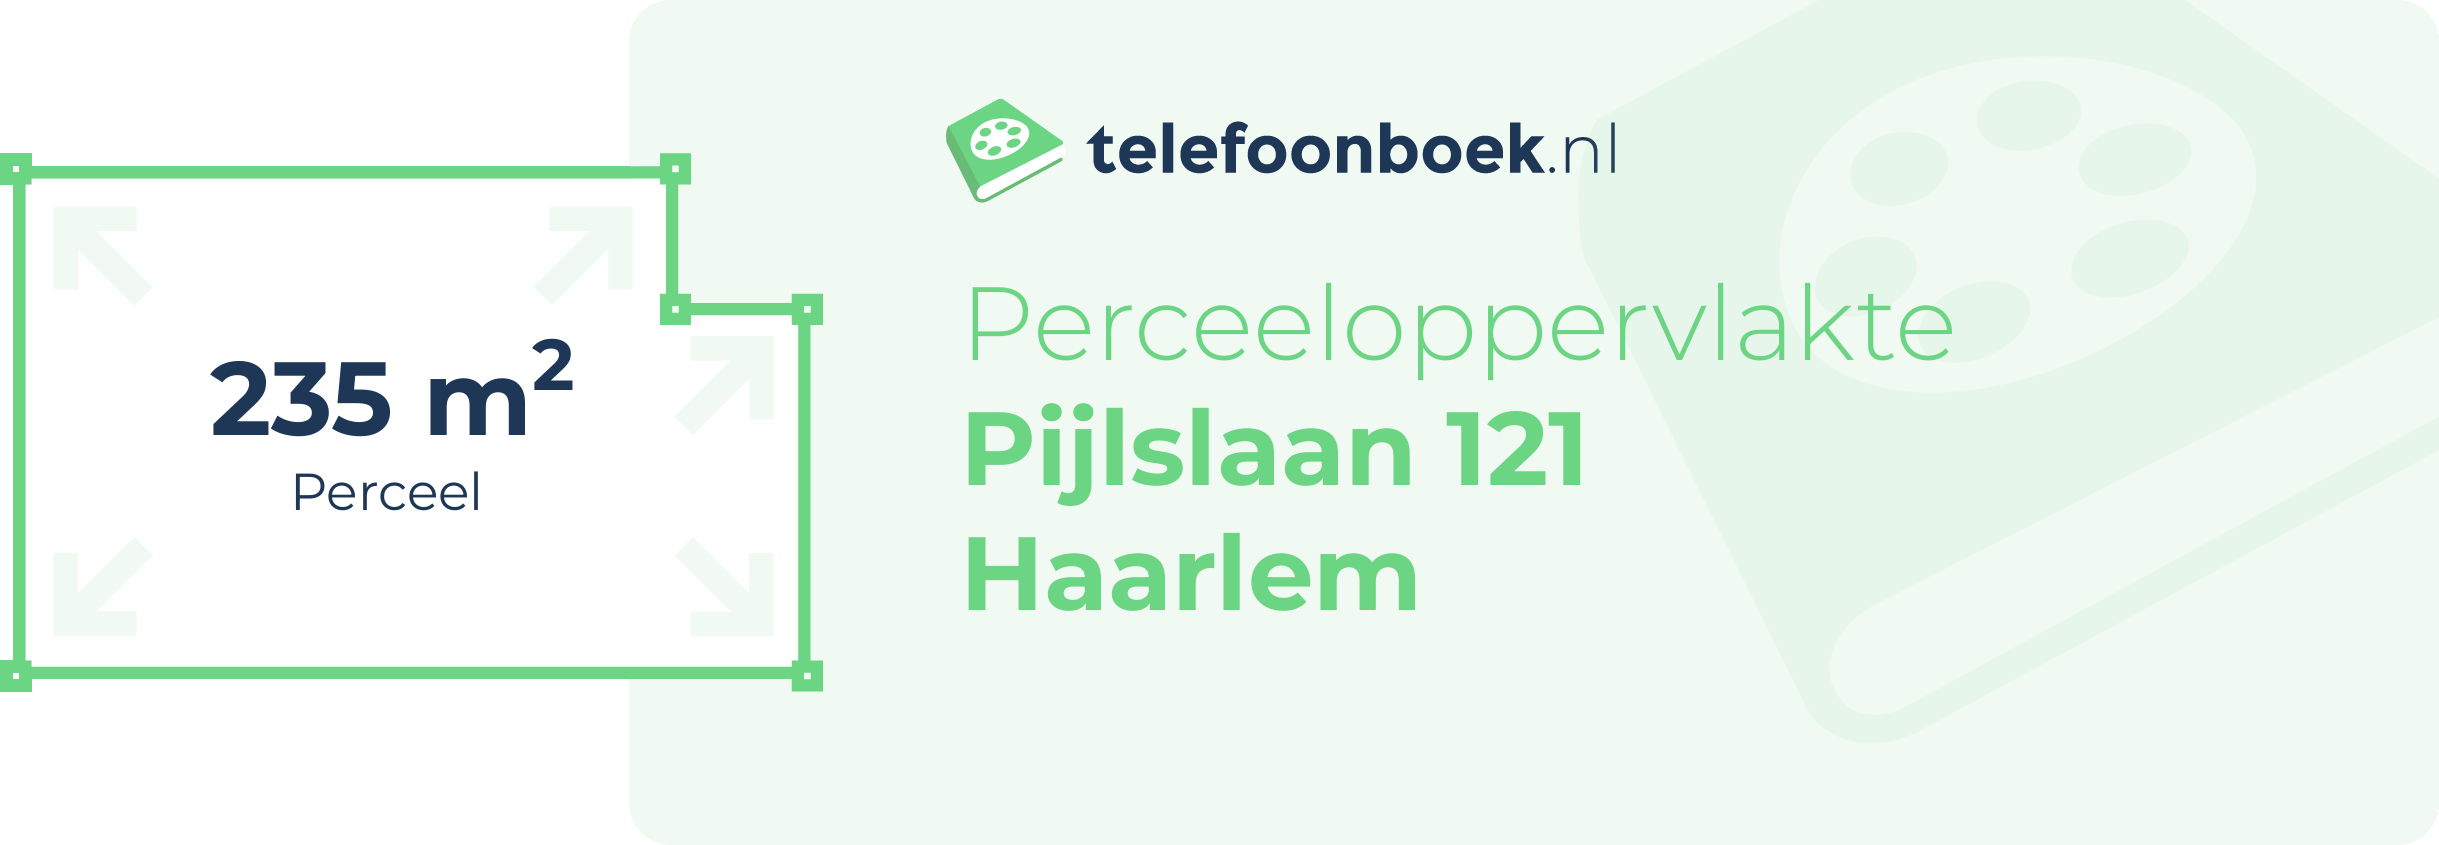 Perceeloppervlakte Pijlslaan 121 Haarlem